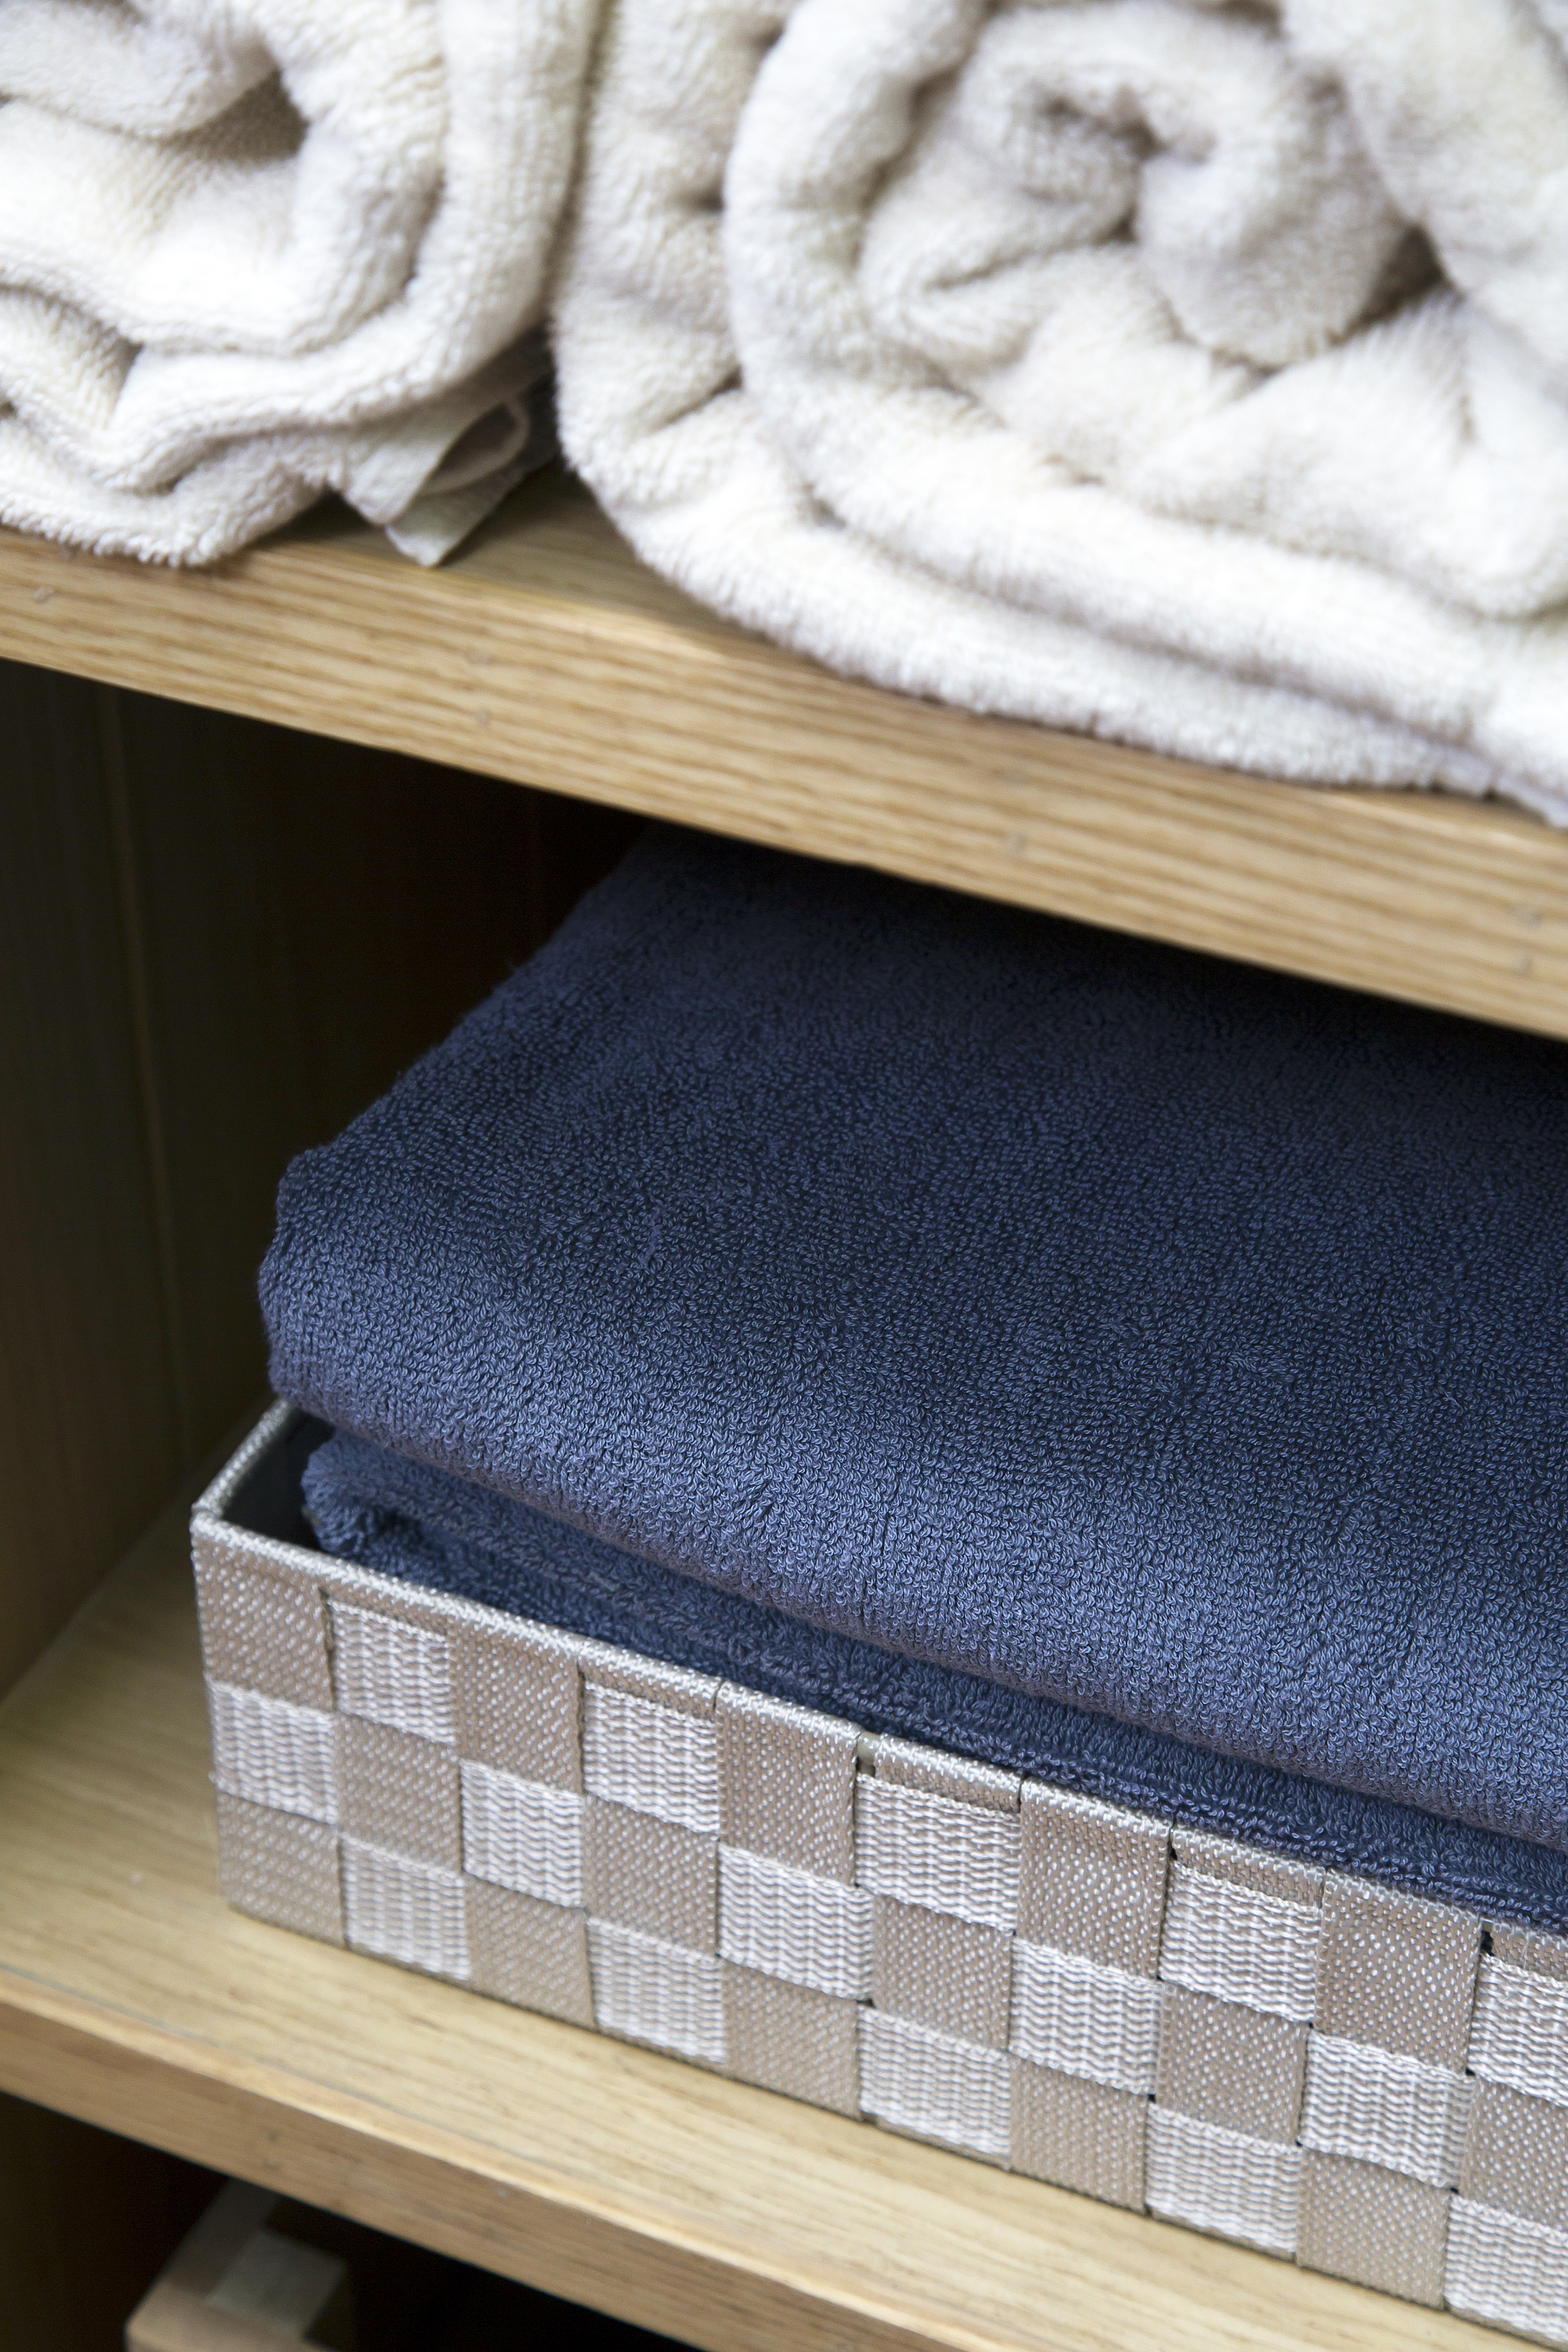 Towels | Source: Shutterstock